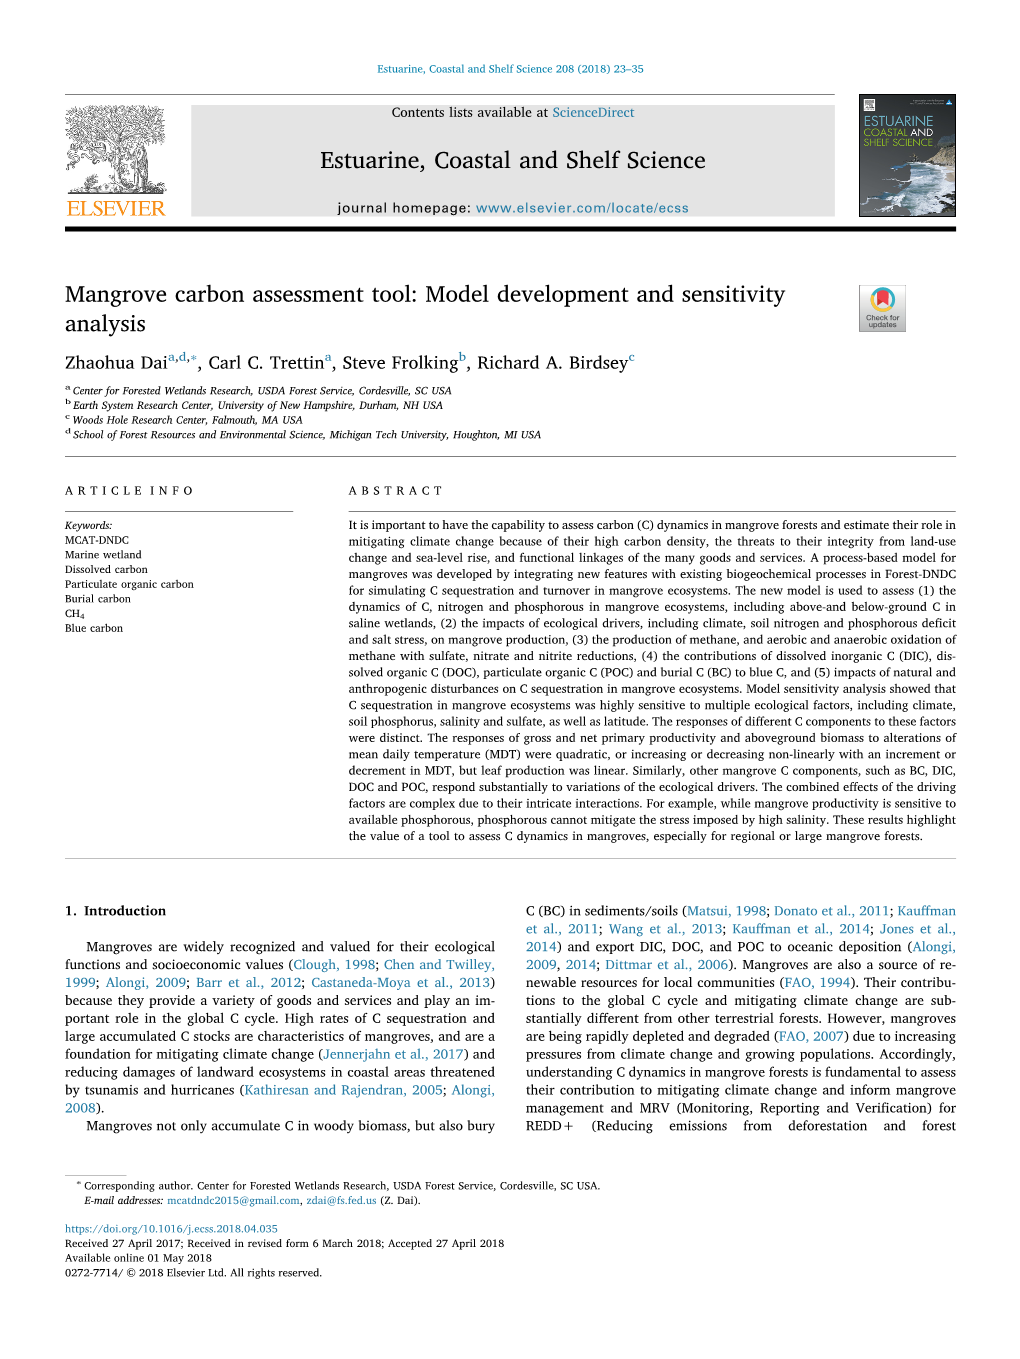 Mangrove Carbon Assessment Tool Model Development and Sensitivity Analysis